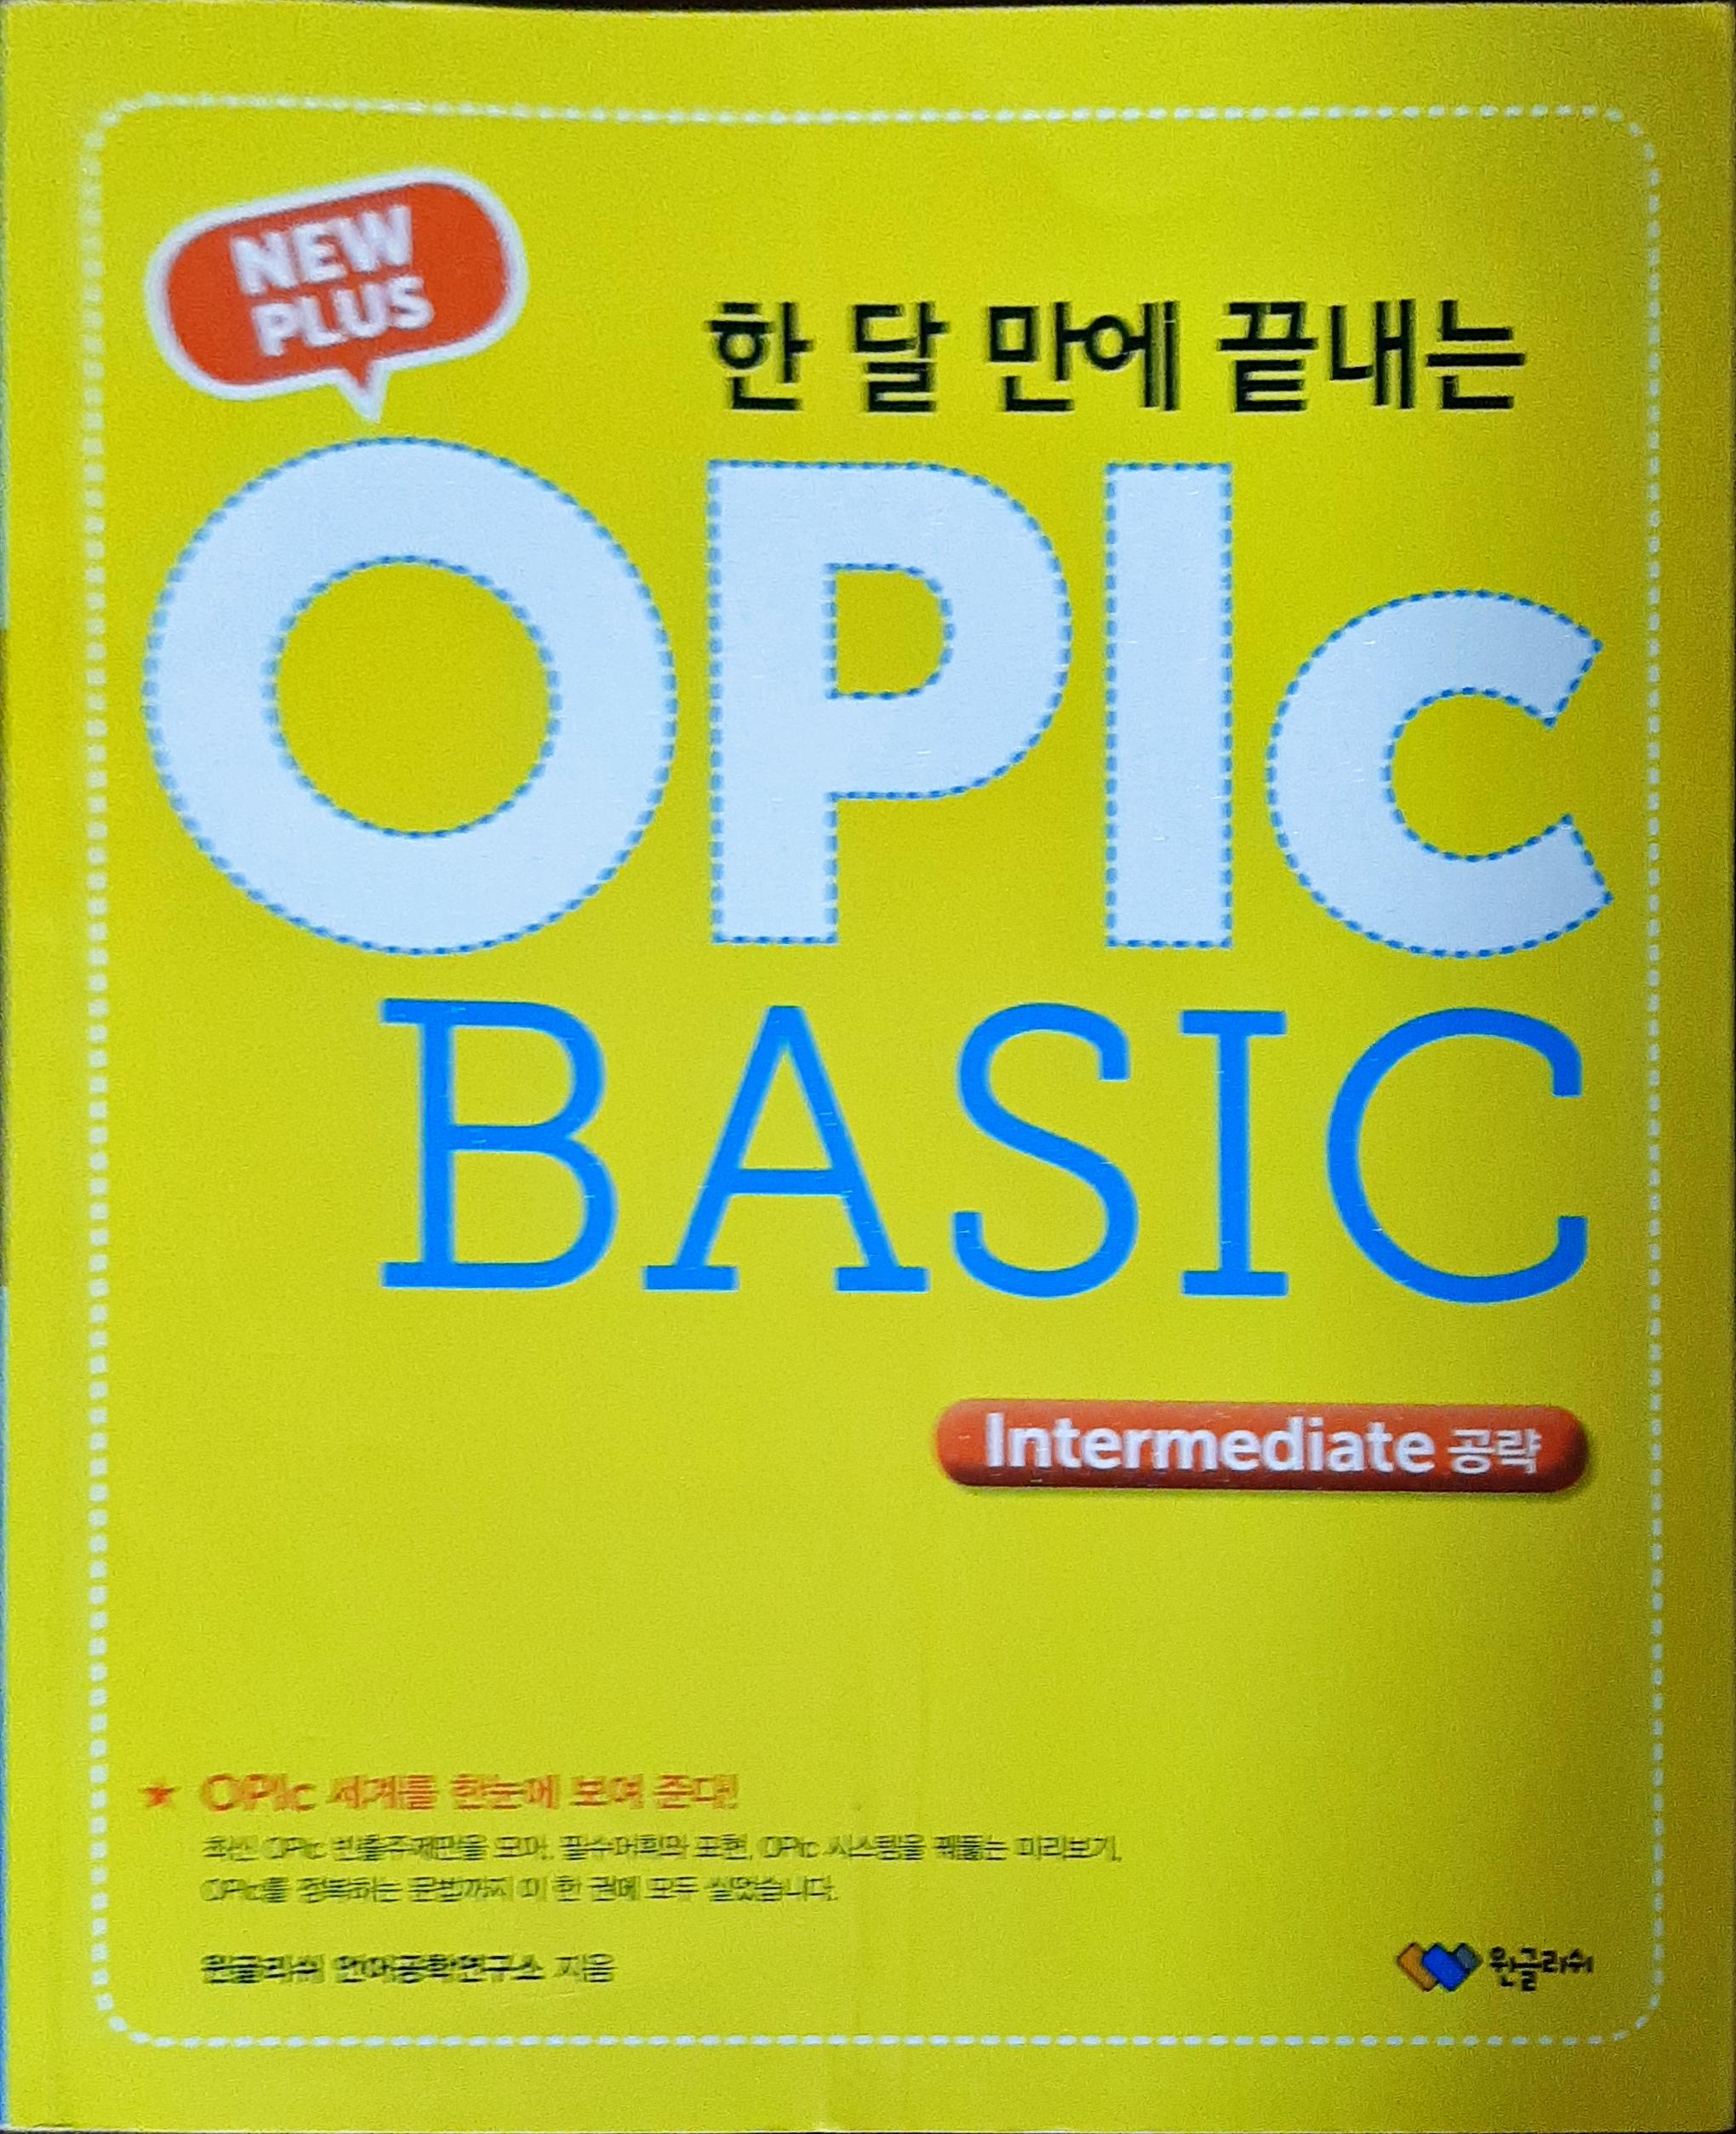 NEW PLUS 한 달 만에 끝내는 OPIc BASIC